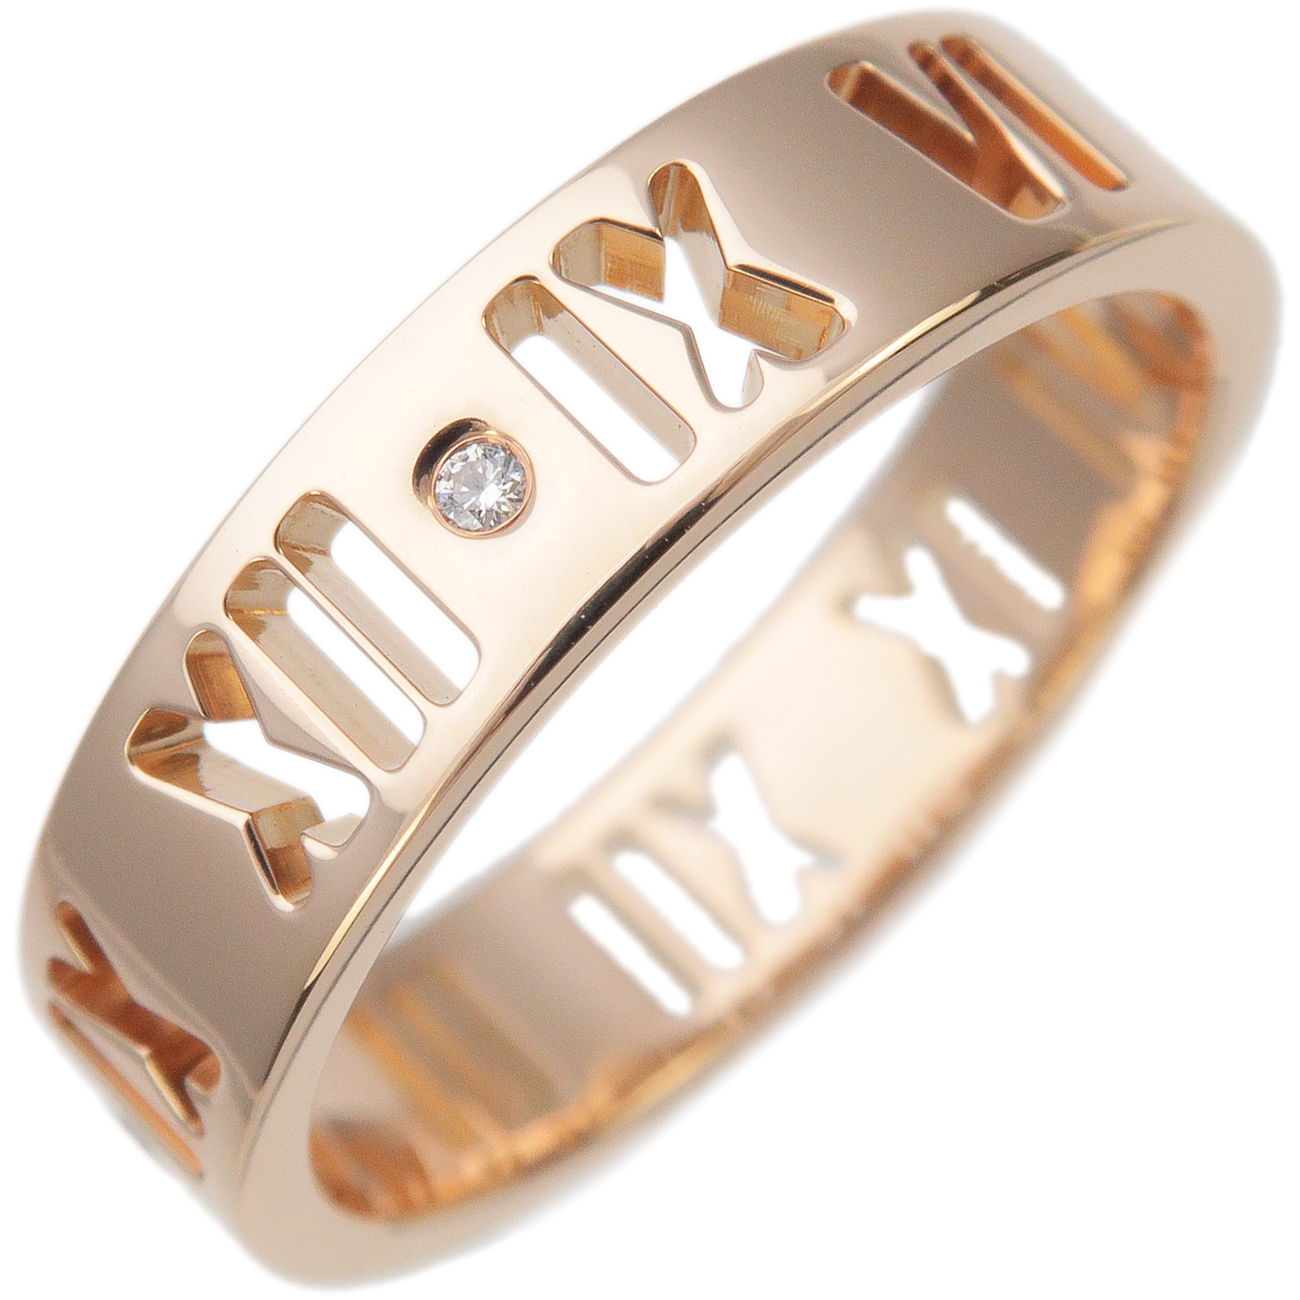 Tiffany&Co.-Pierced-Atlas-4P-Diamond-Ring-K18PG-Rose-Gold-US6.5